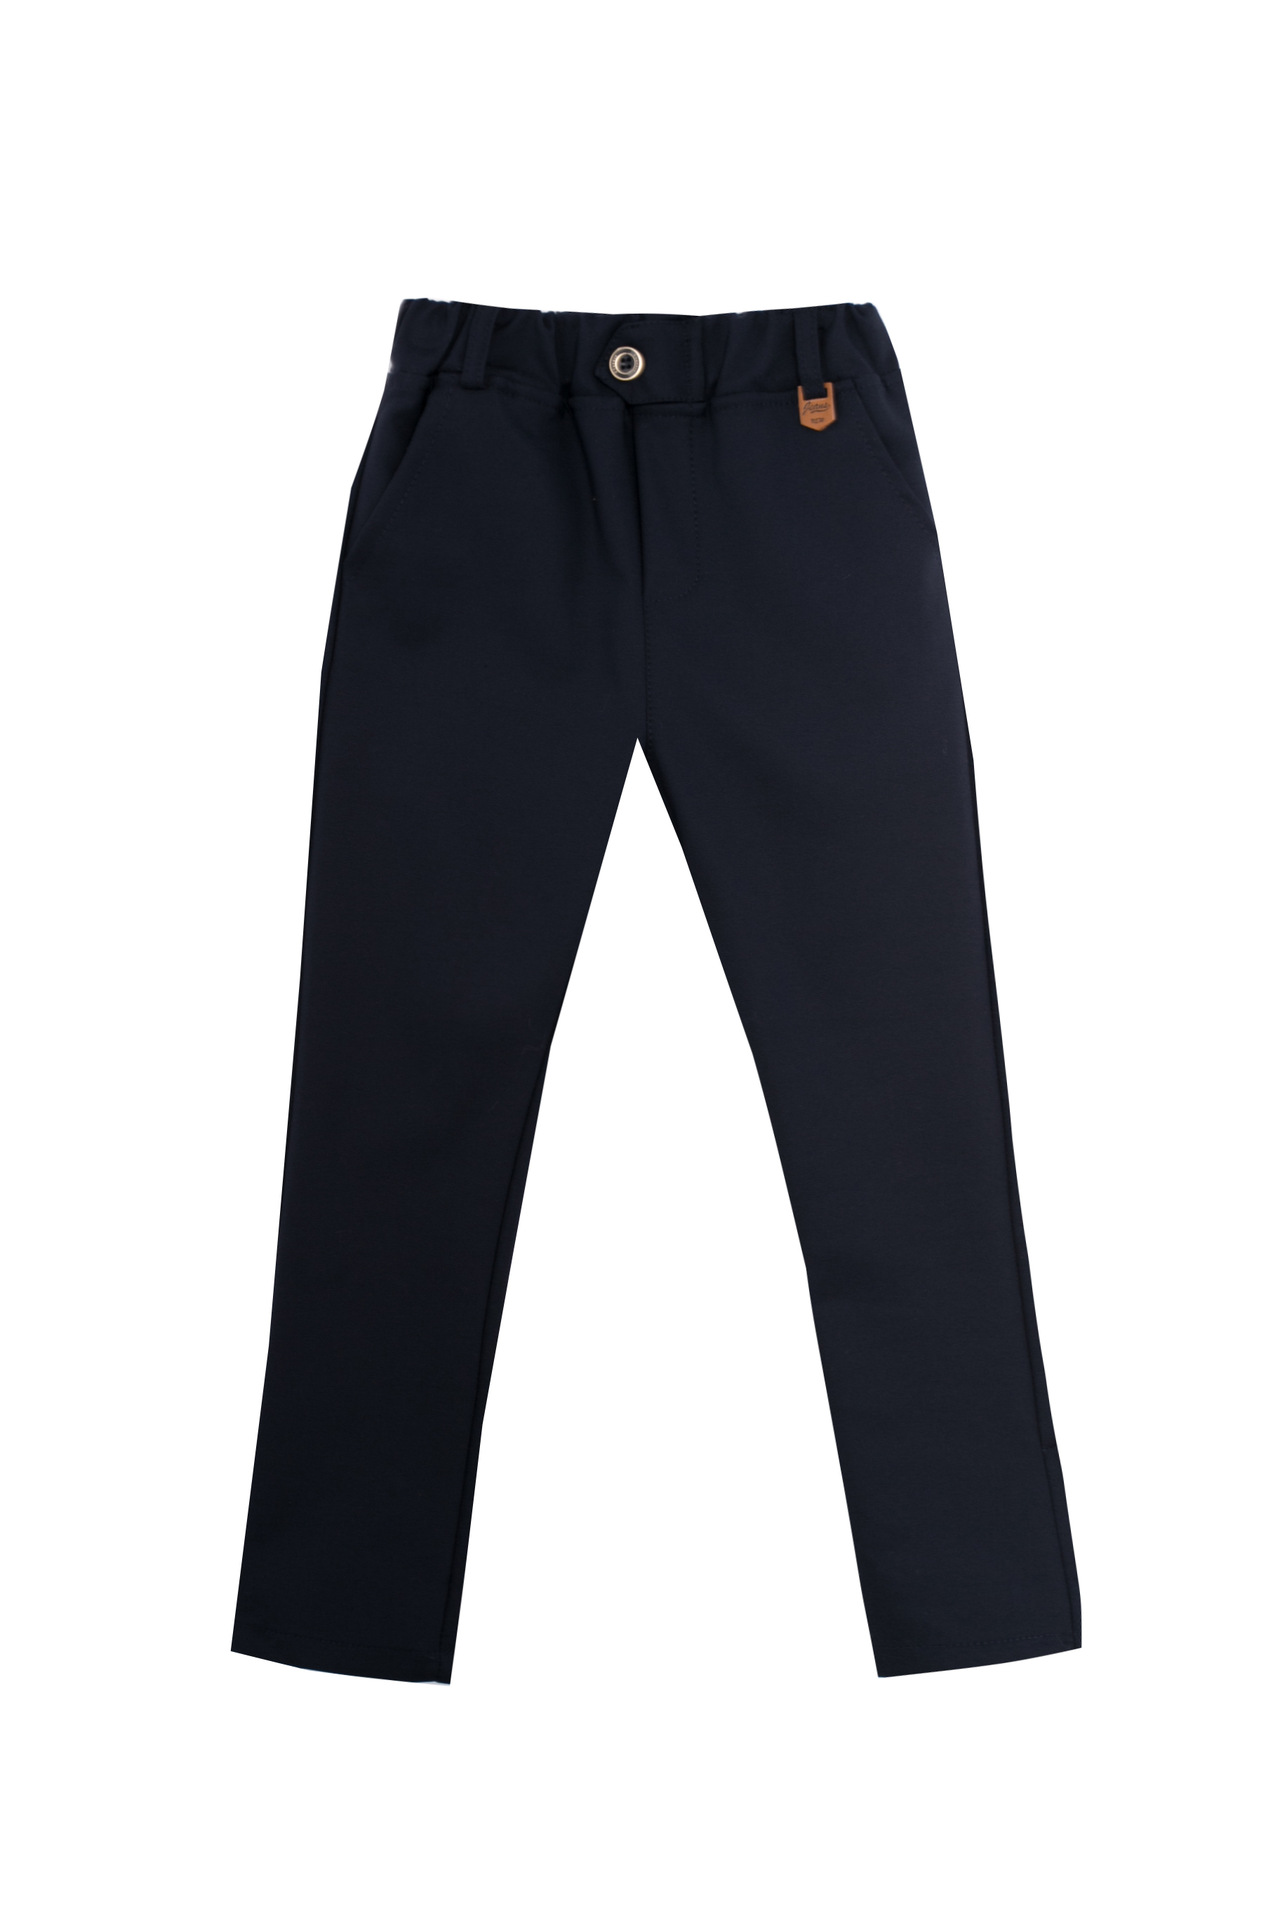 Boys Navy Flat Front Aspire Suit Trousers - DANCERS